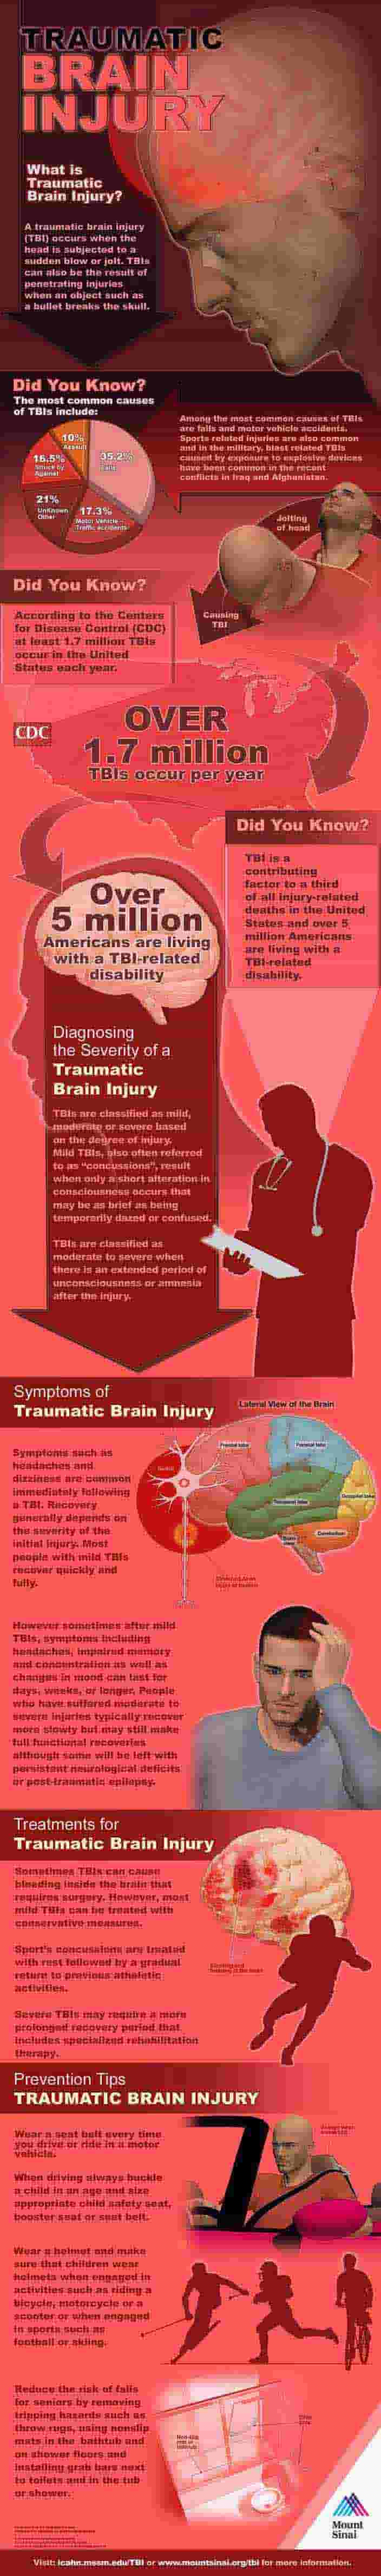 Brain injury trauma